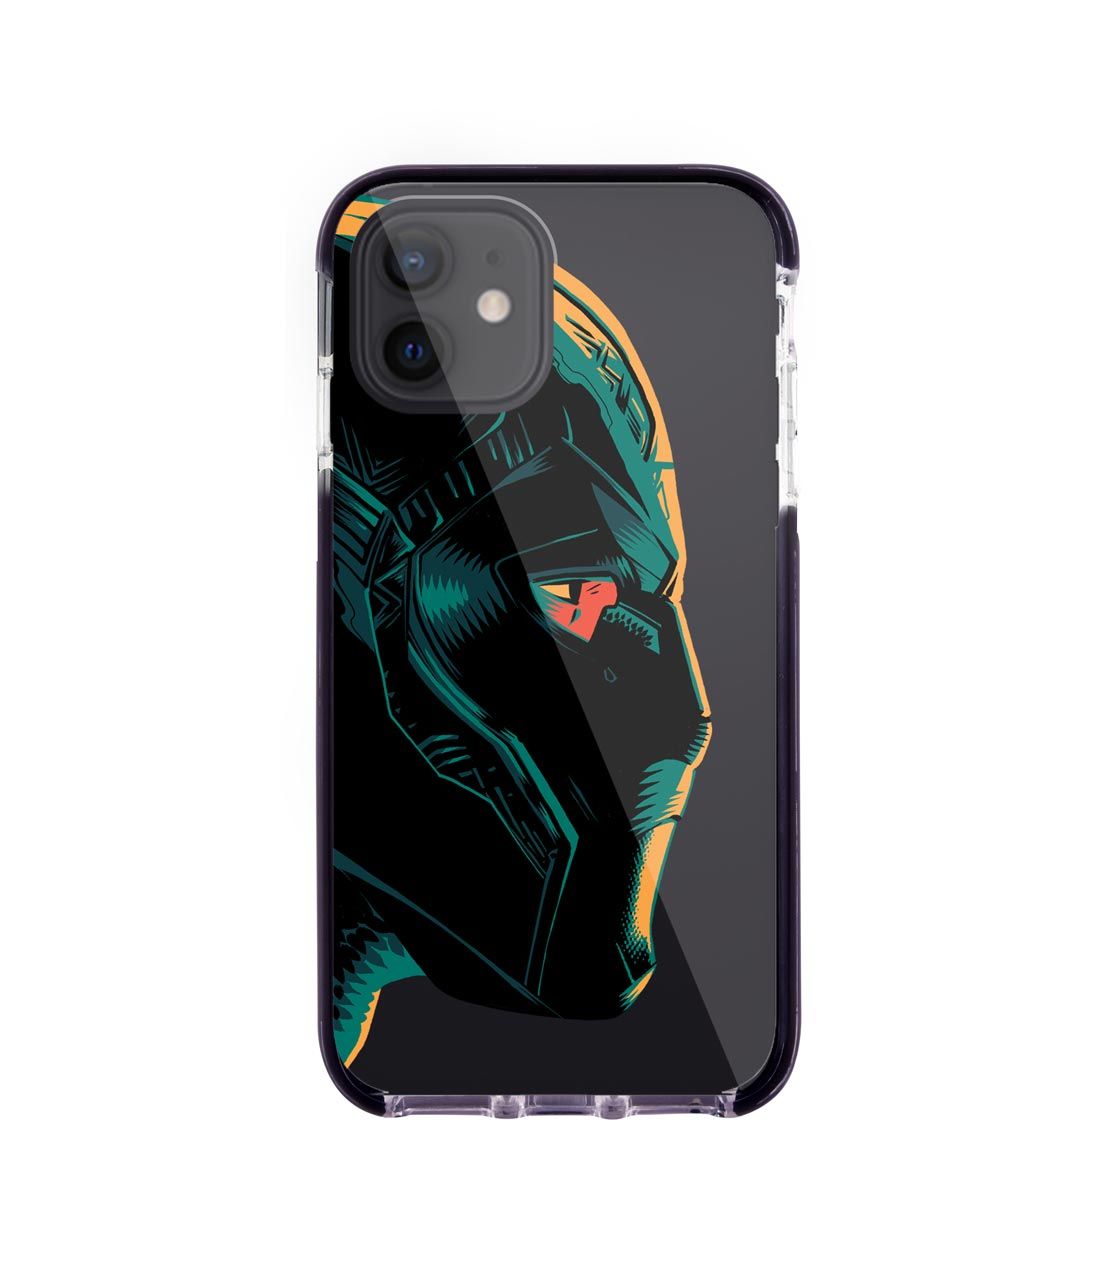 Illuminated Black Panther - Extreme Case for iPhone 12